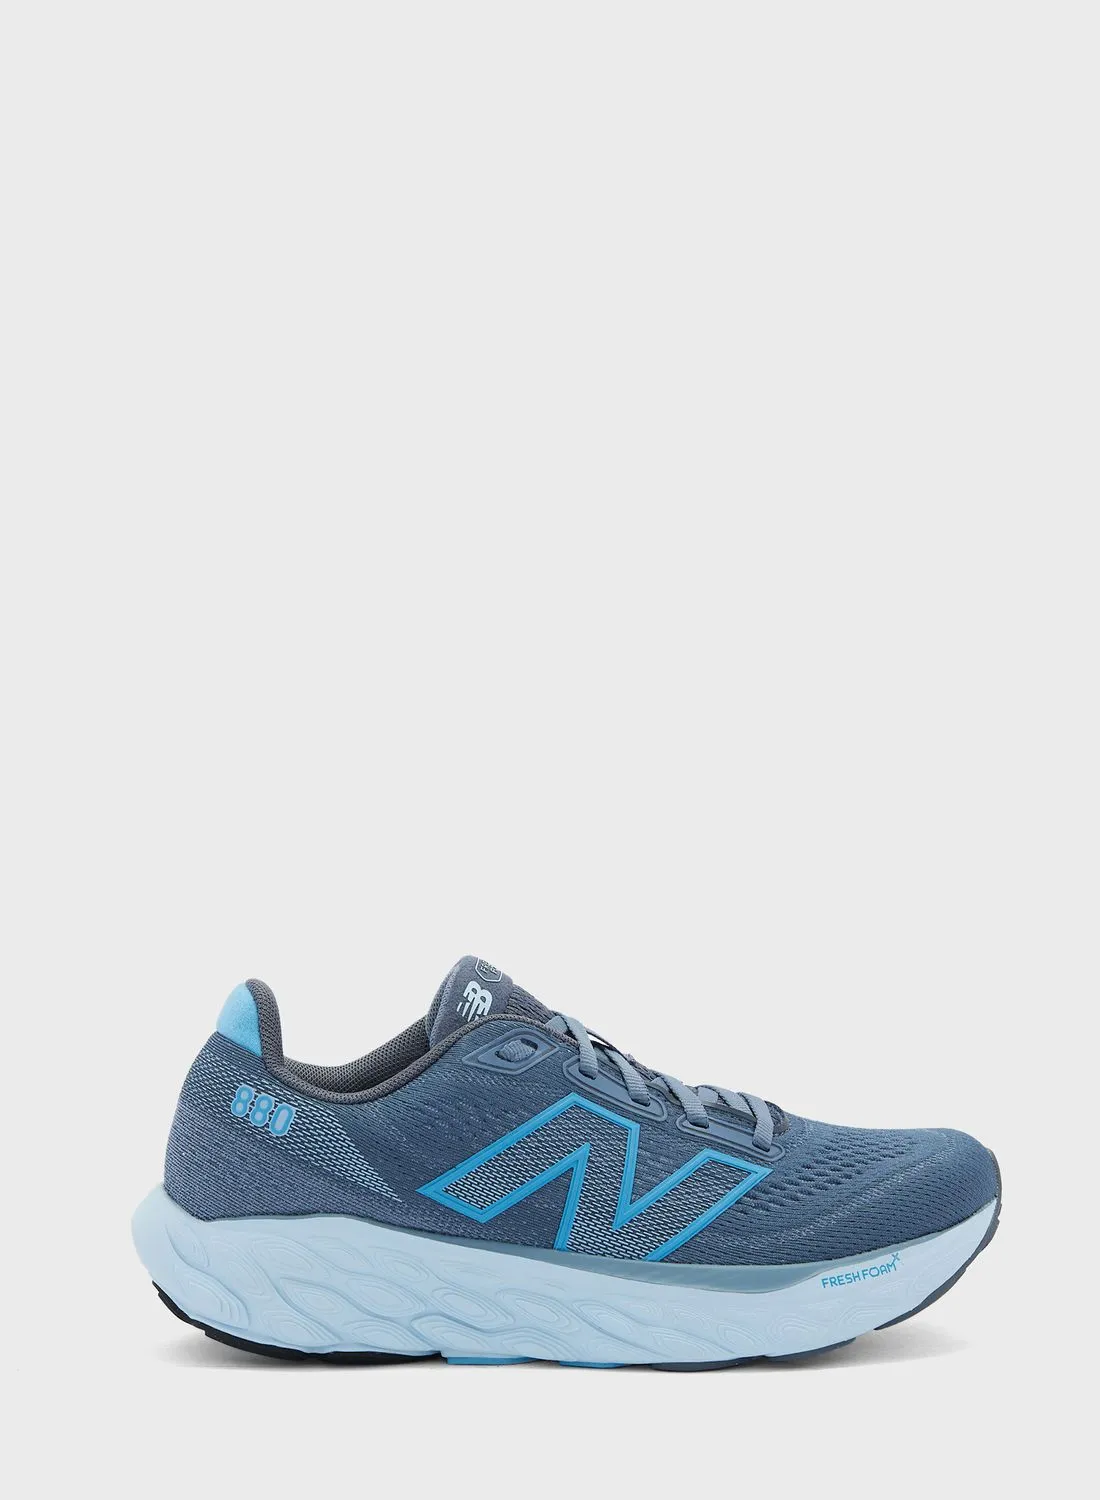 New Balance 880 Running Shoes